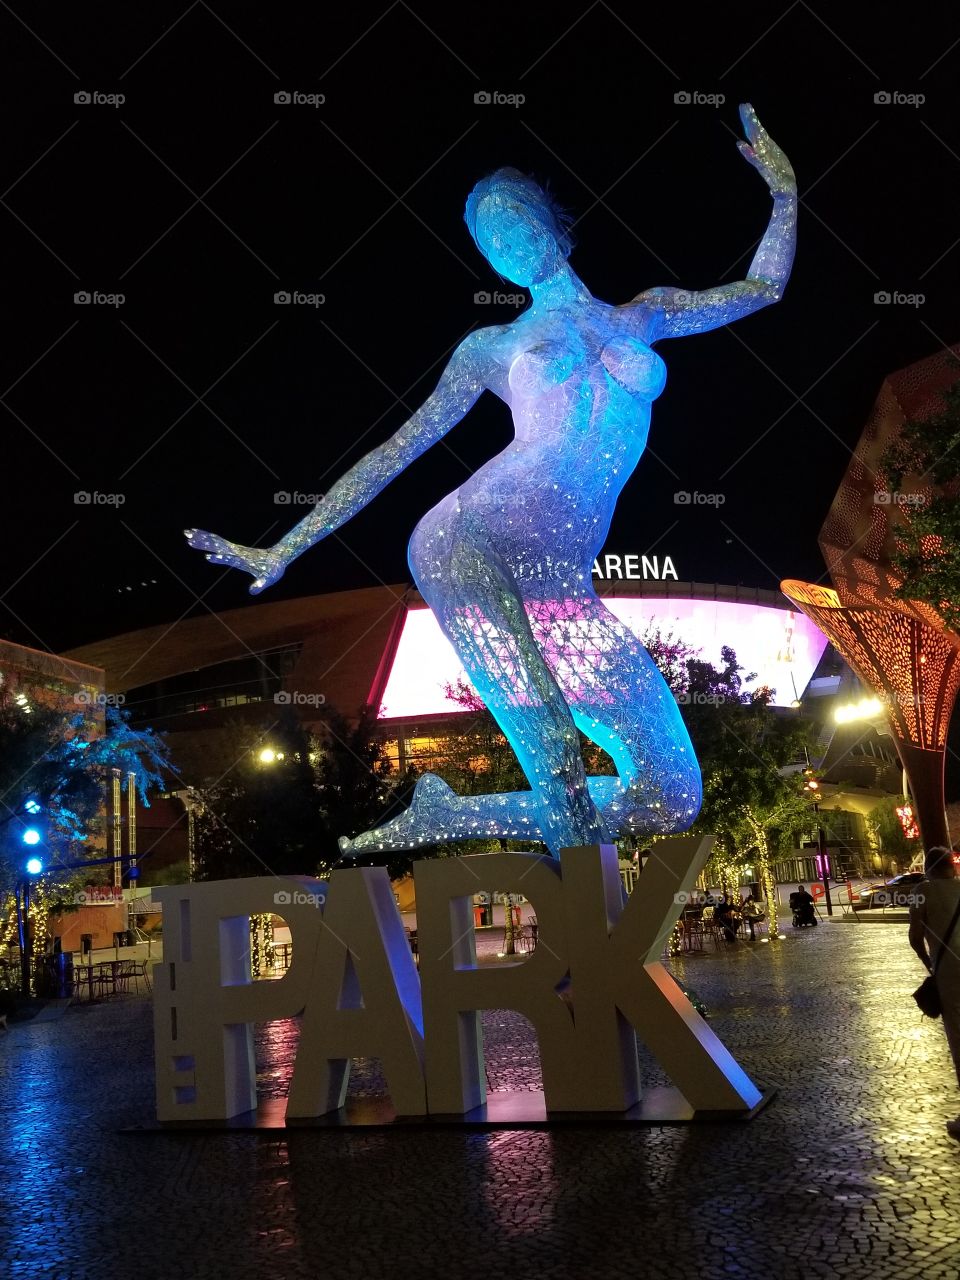 Las Vegas in The Park at night